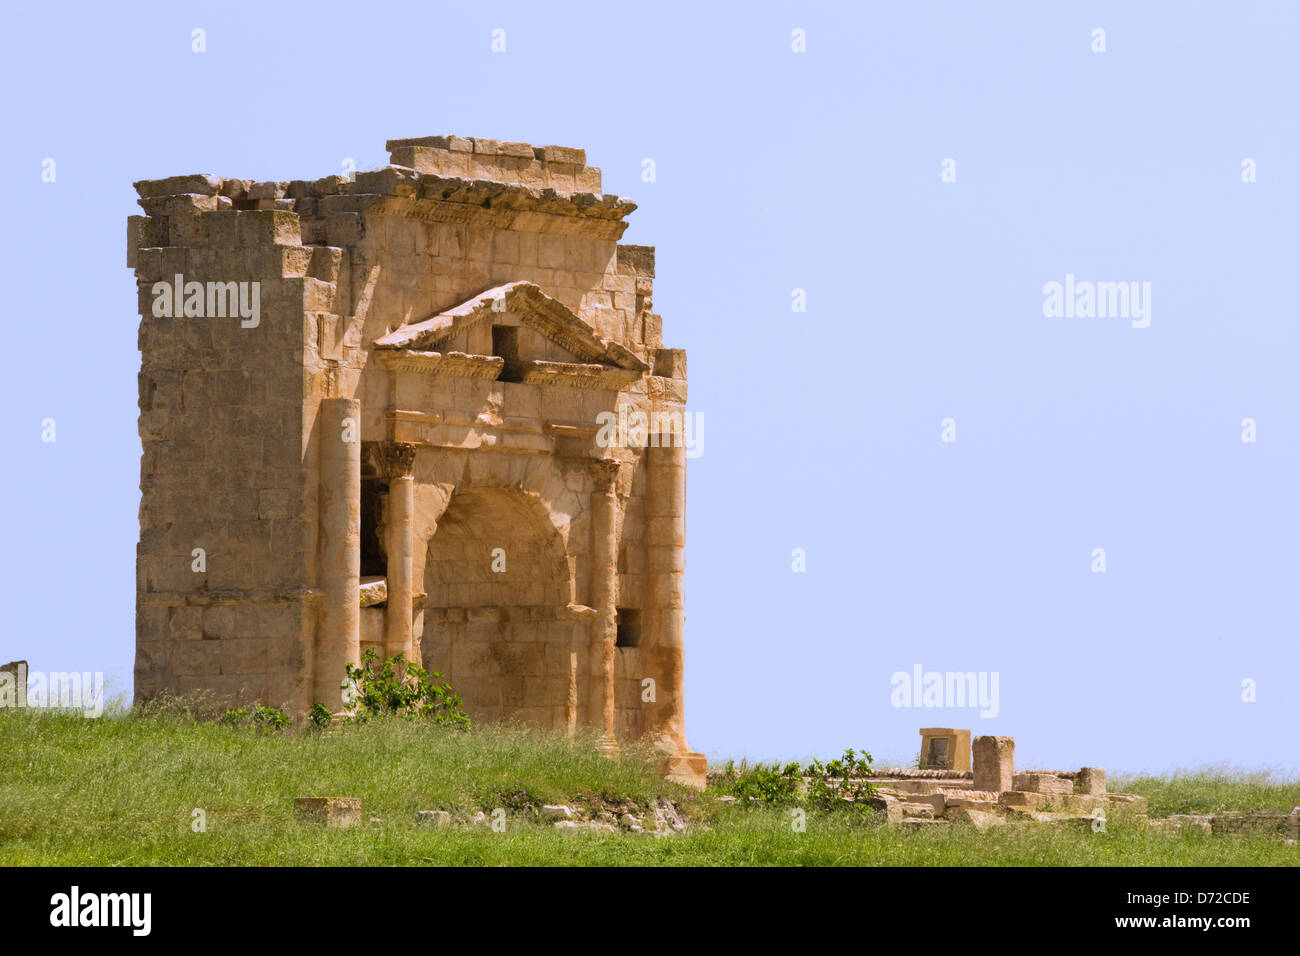 Le rovine romane, Makthar, Tunisia Foto Stock